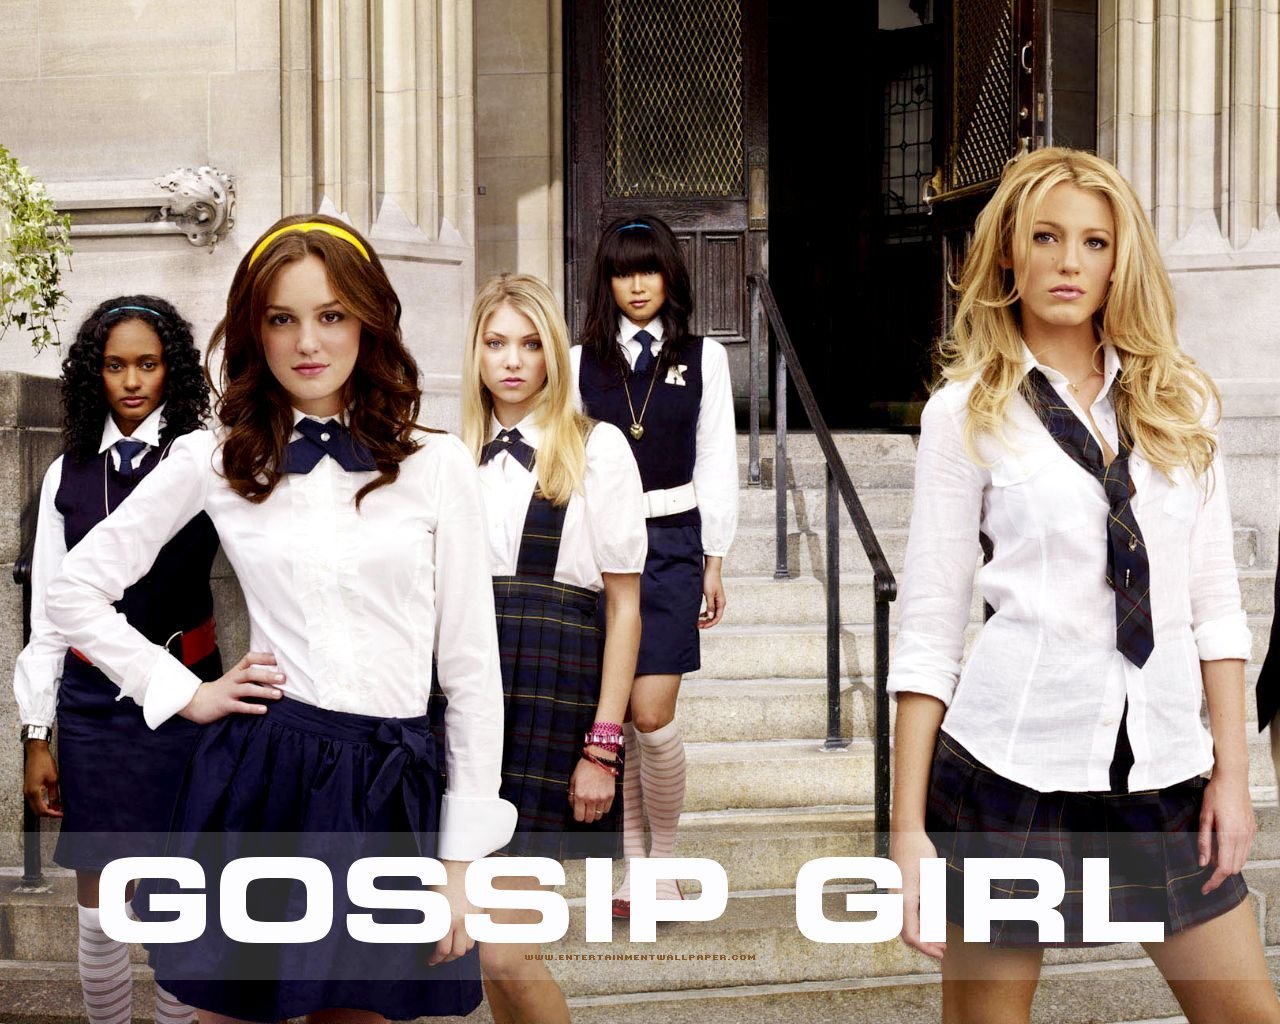 Gossip Girl Gossip Girl Wallpaper 7363732 Fanpop